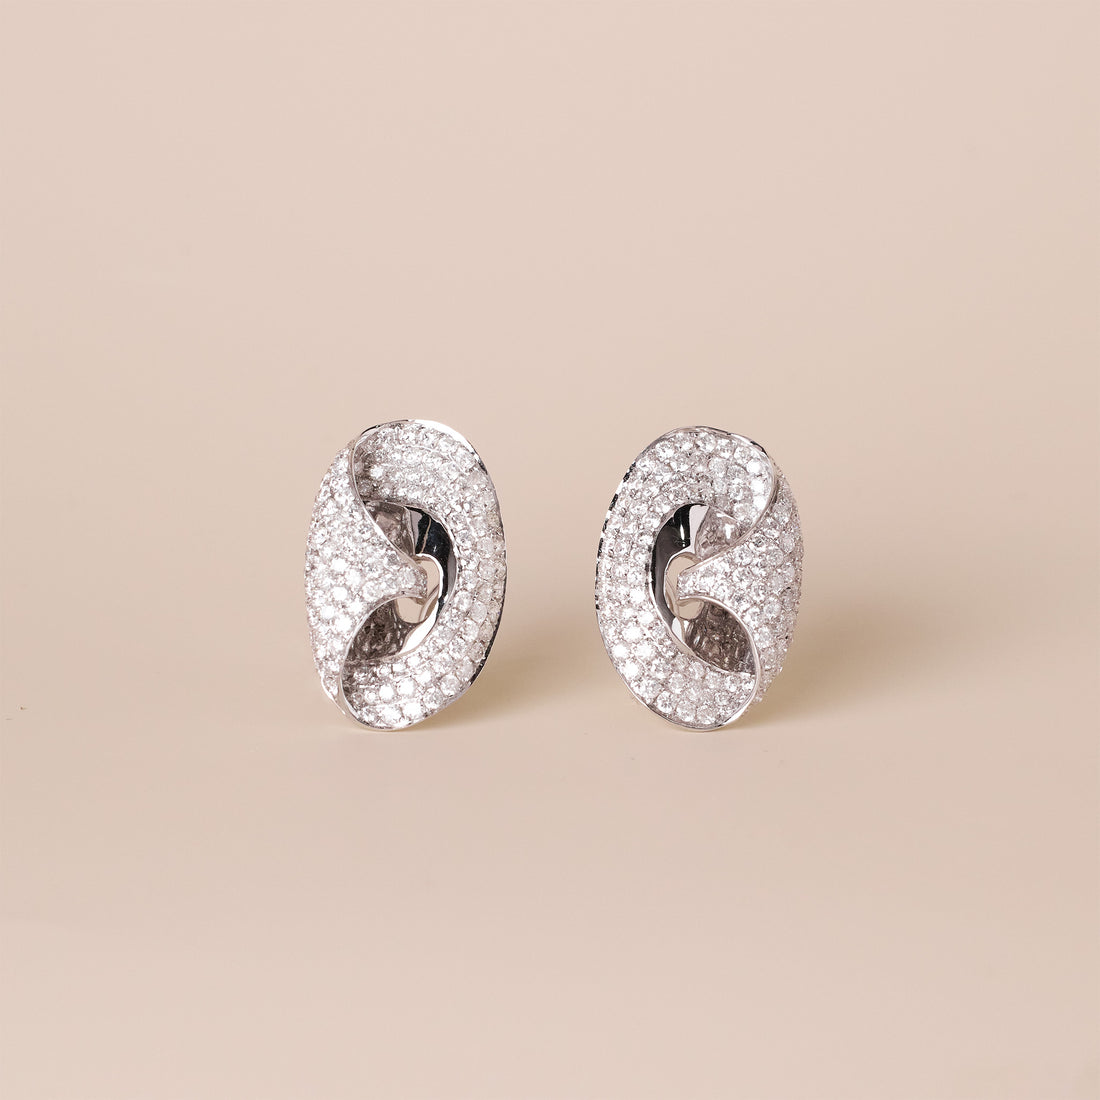 2.77ct.tw. Natural Diamond Earrings in 18K Gold